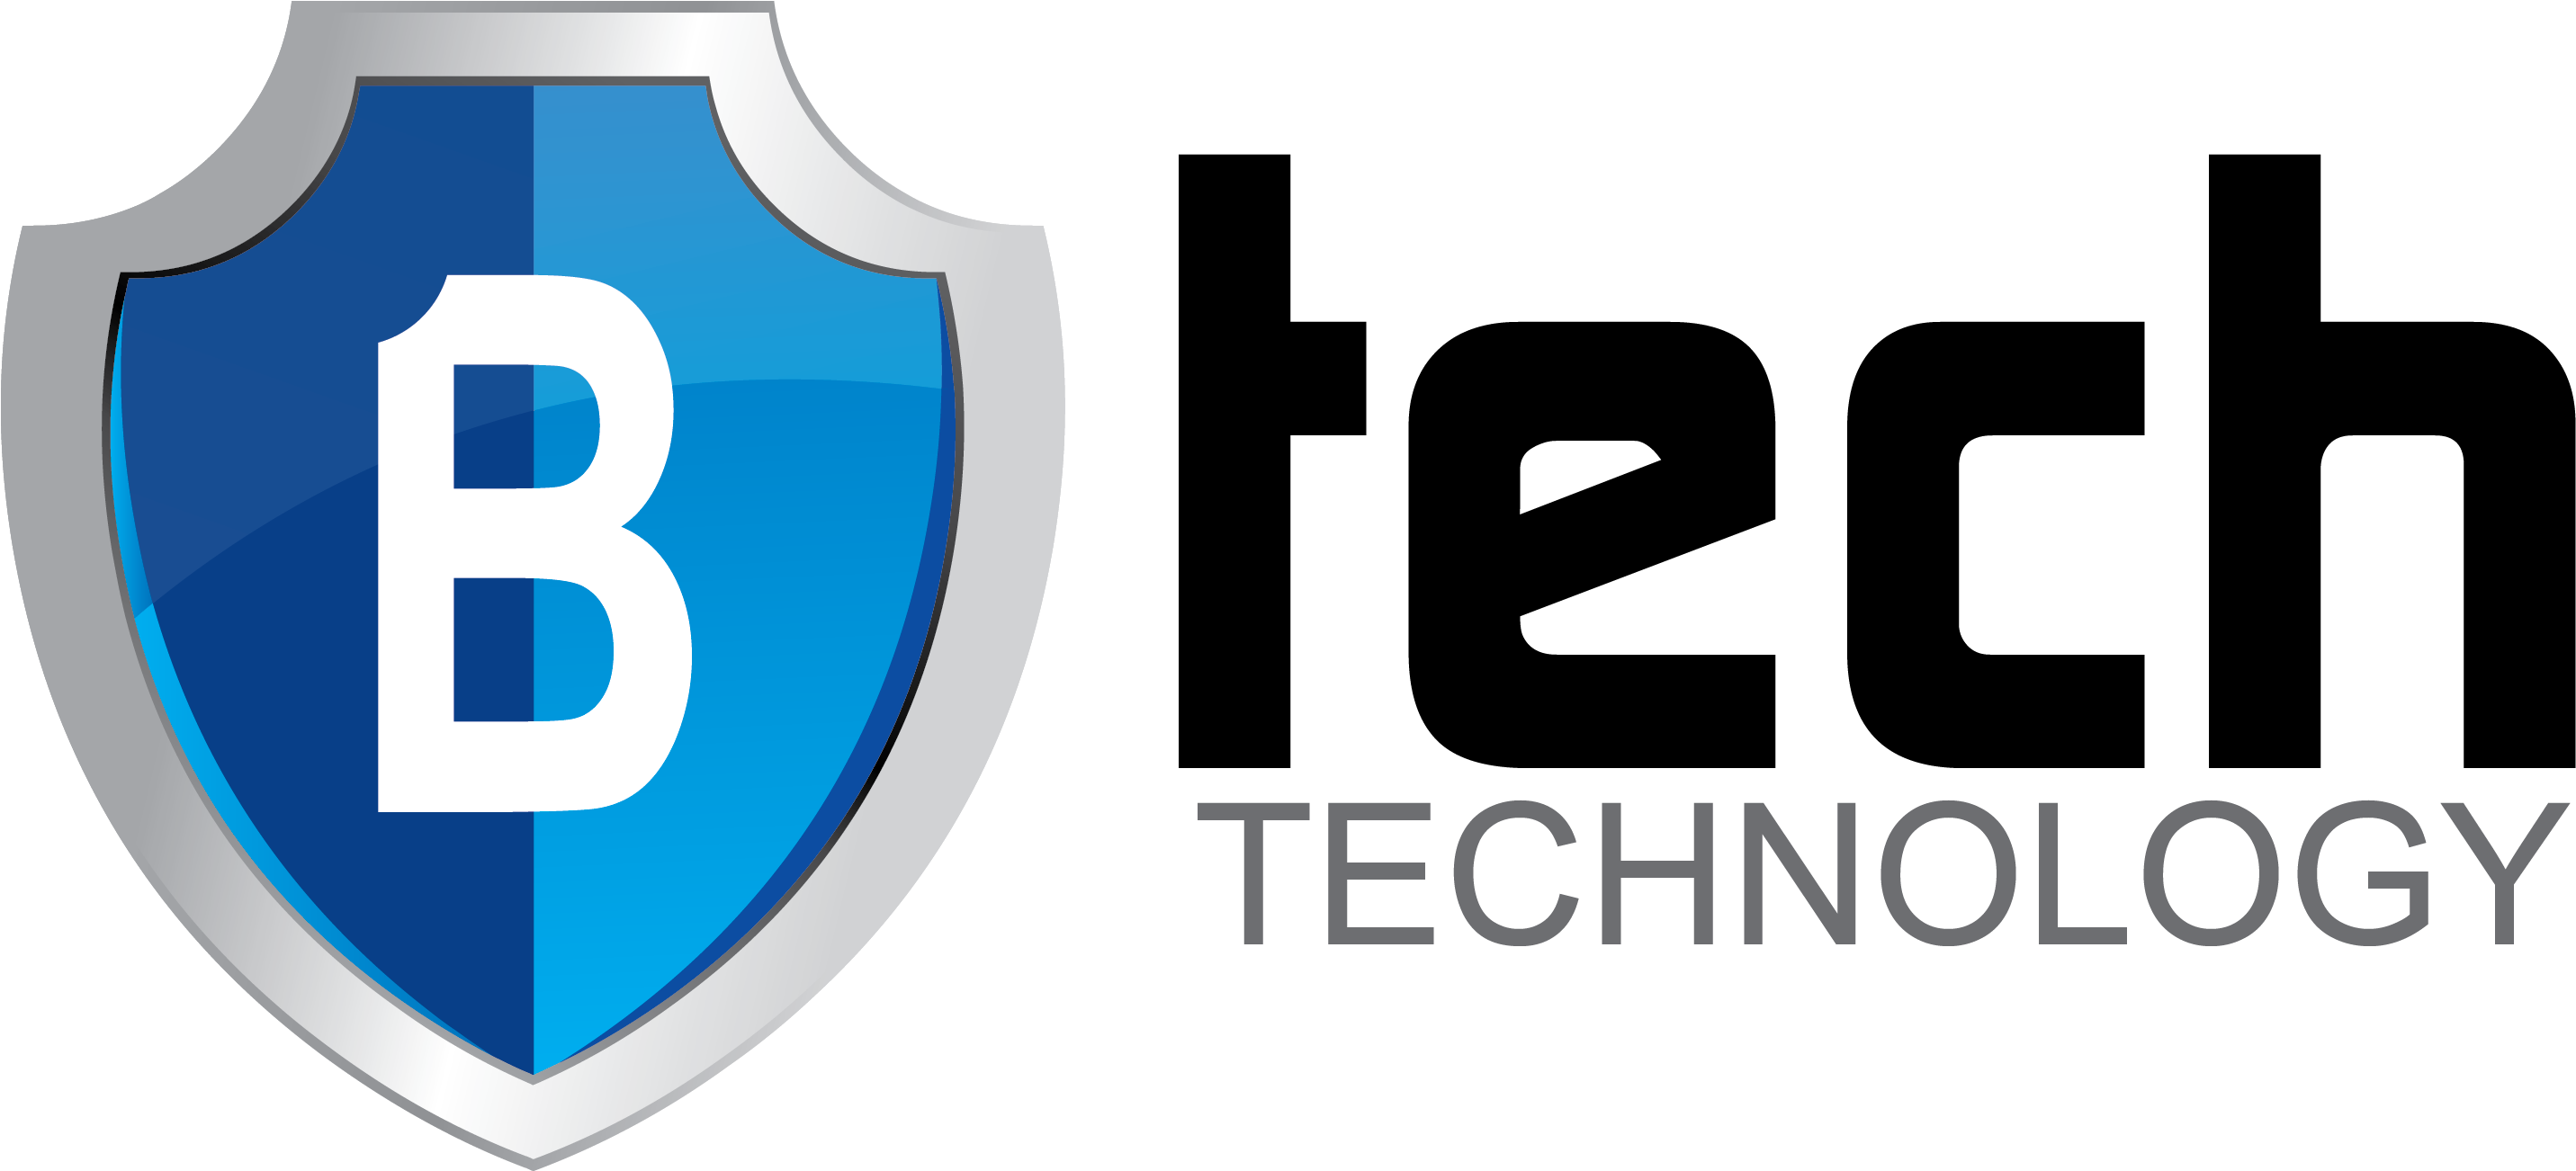 B Tech Logo - B Tech Logo Png (2905x1301), Png Download